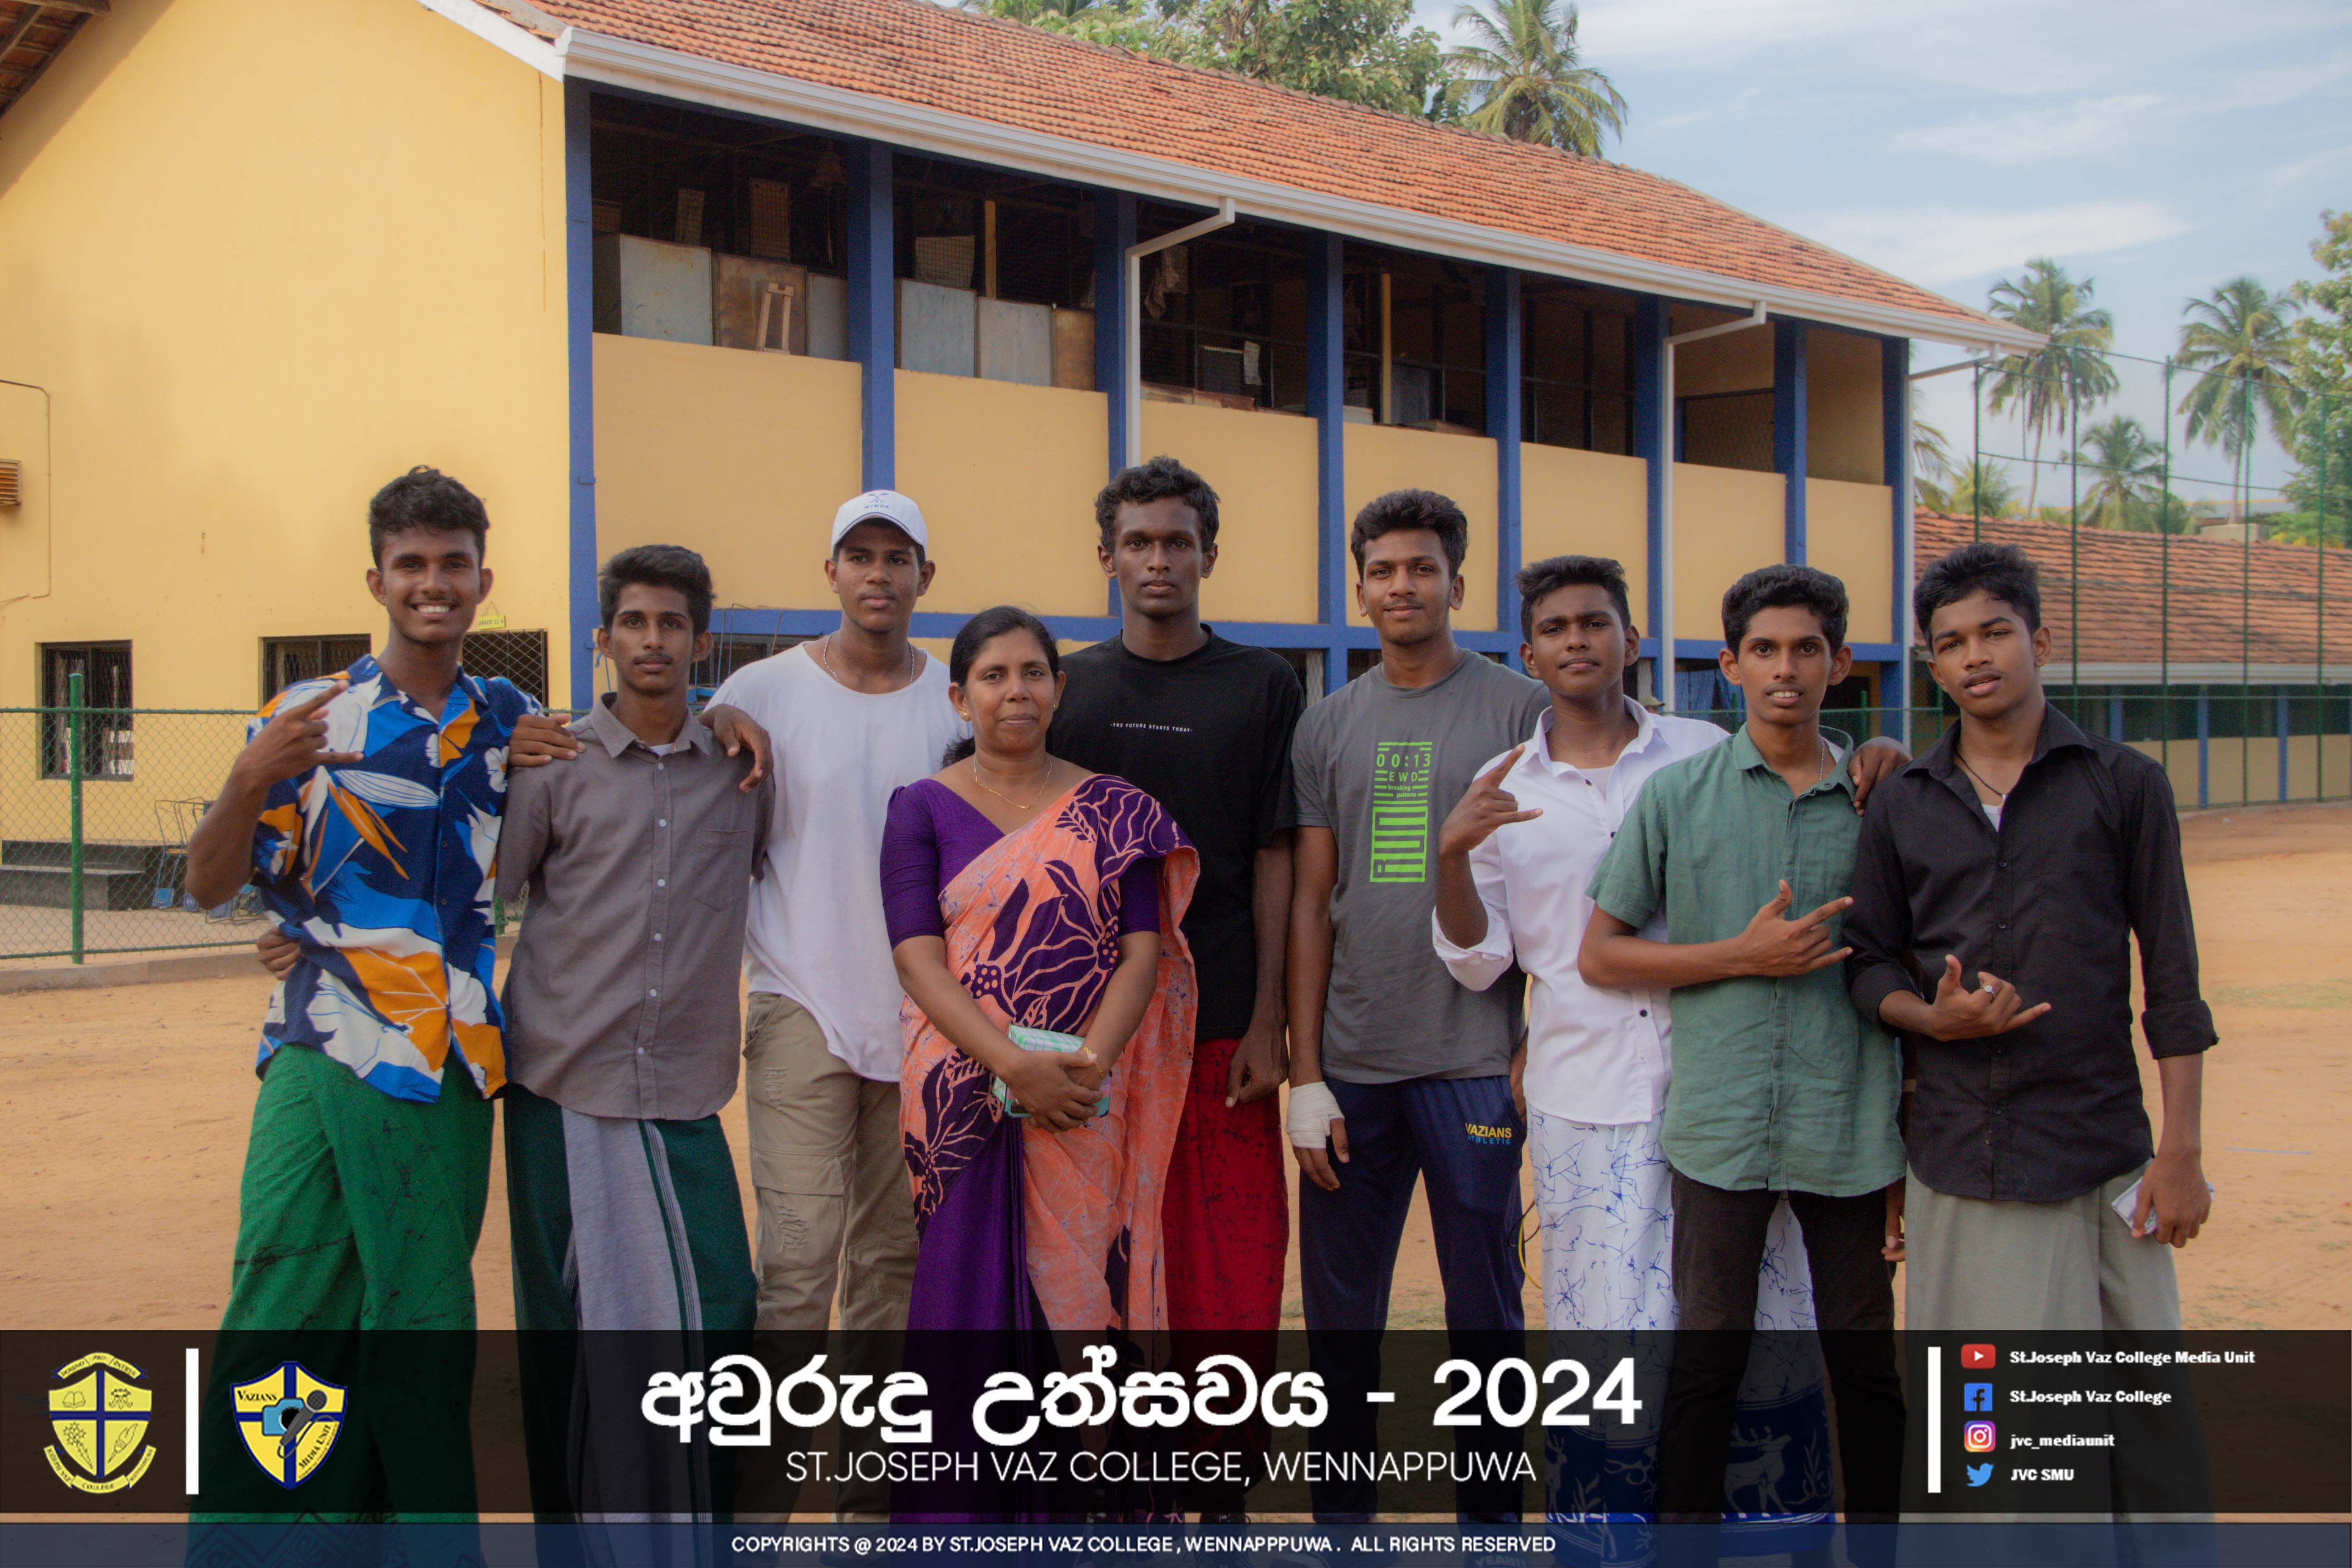 New Year Festival 2024 - St. Joseph Vaz College - Wennappuwa - Sri Lanka